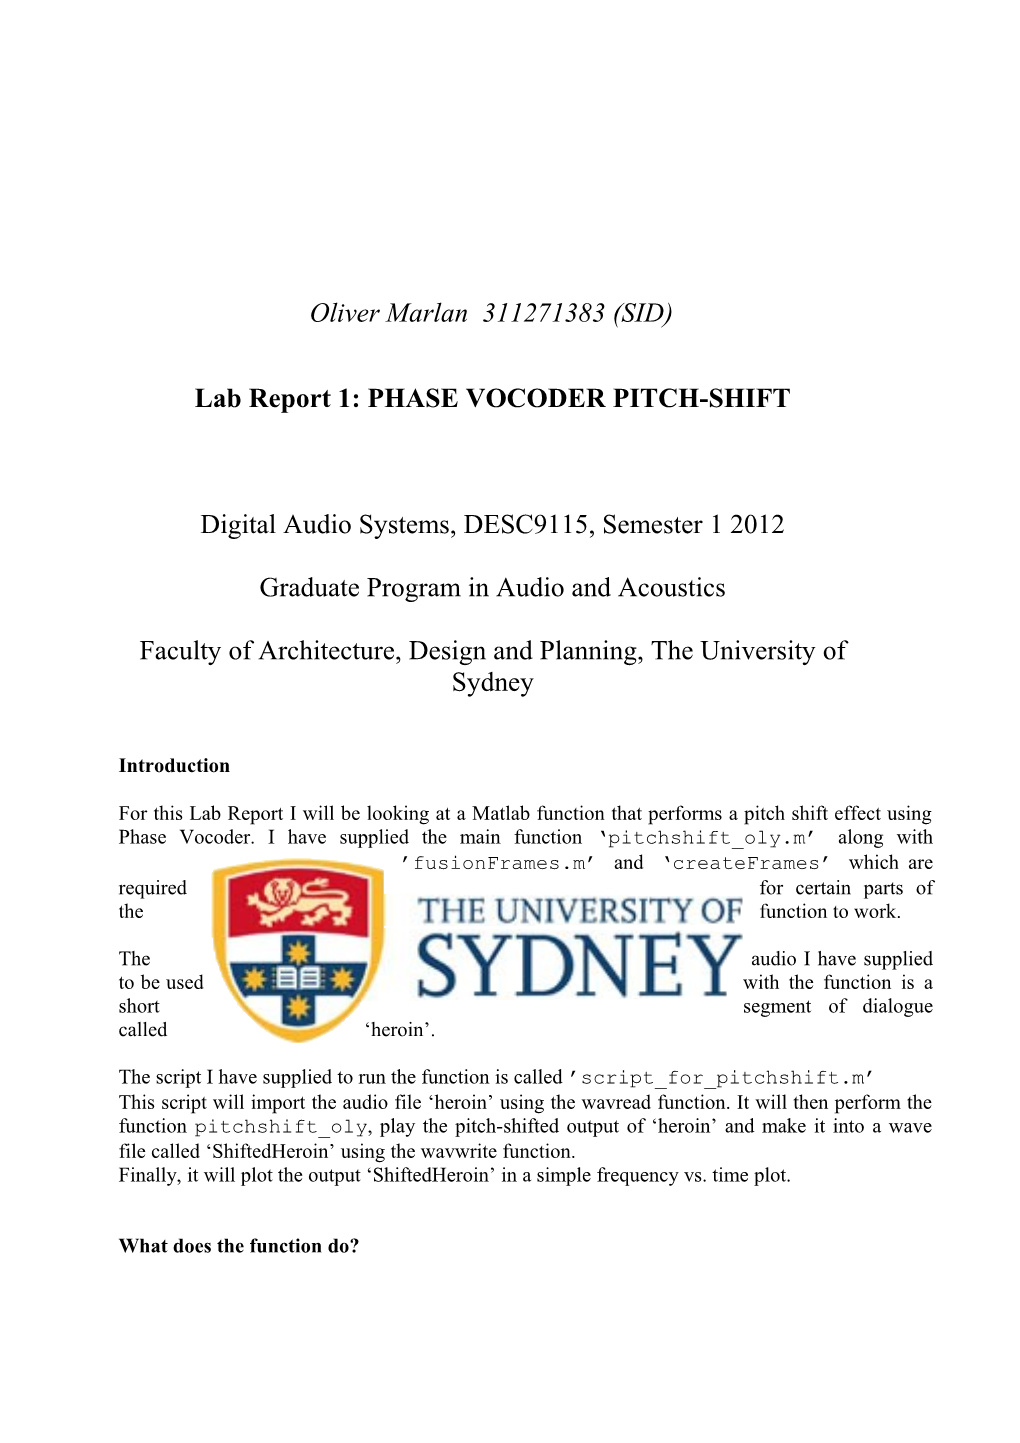 Lab Report 1: PHASE VOCODER PITCH-SHIFT